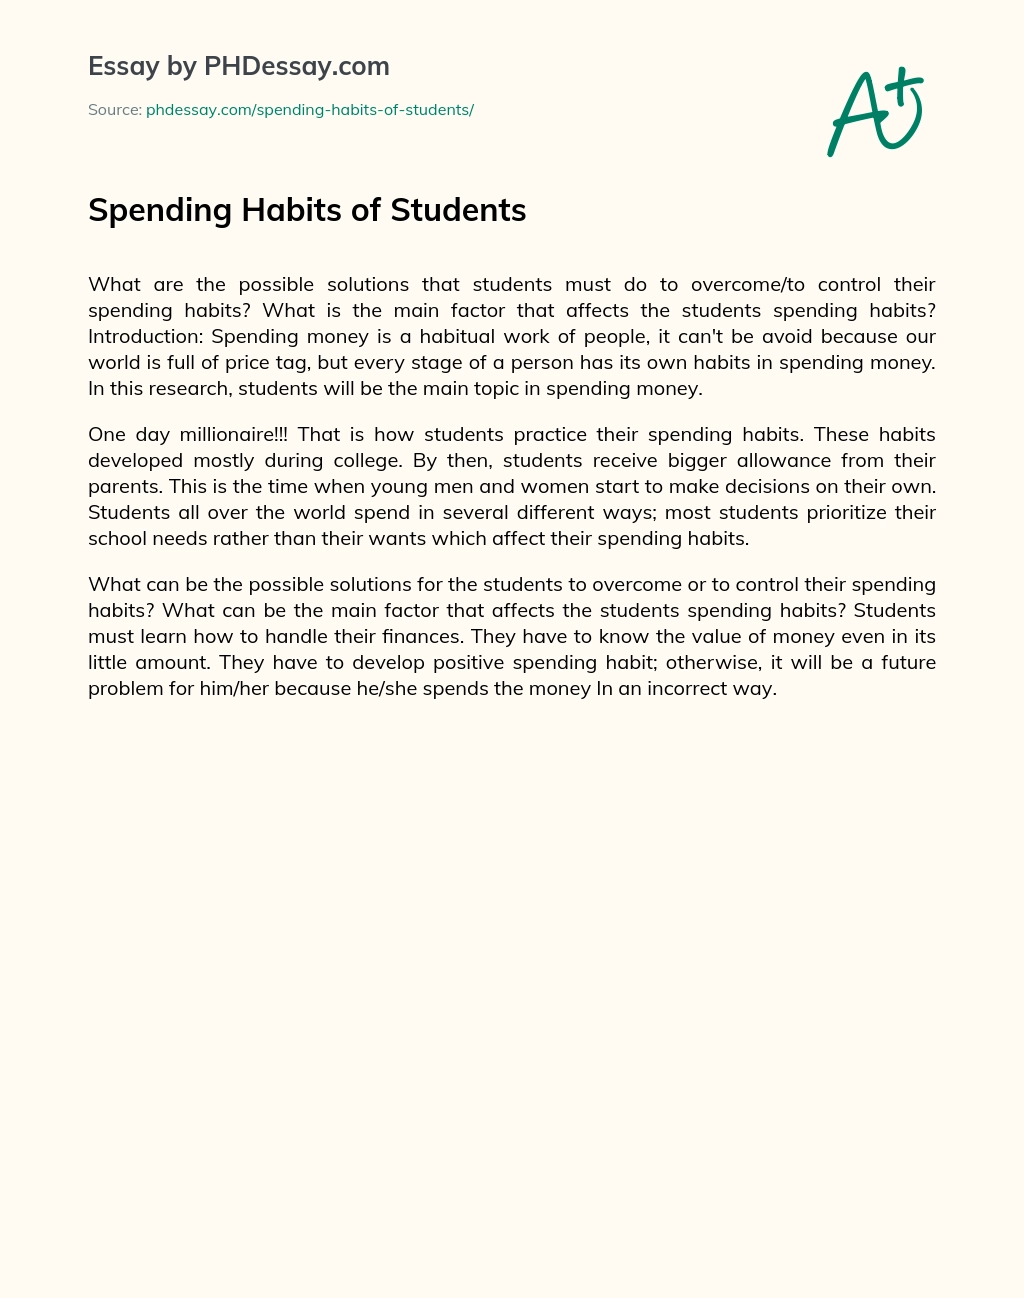 Spending Habits of Students essay